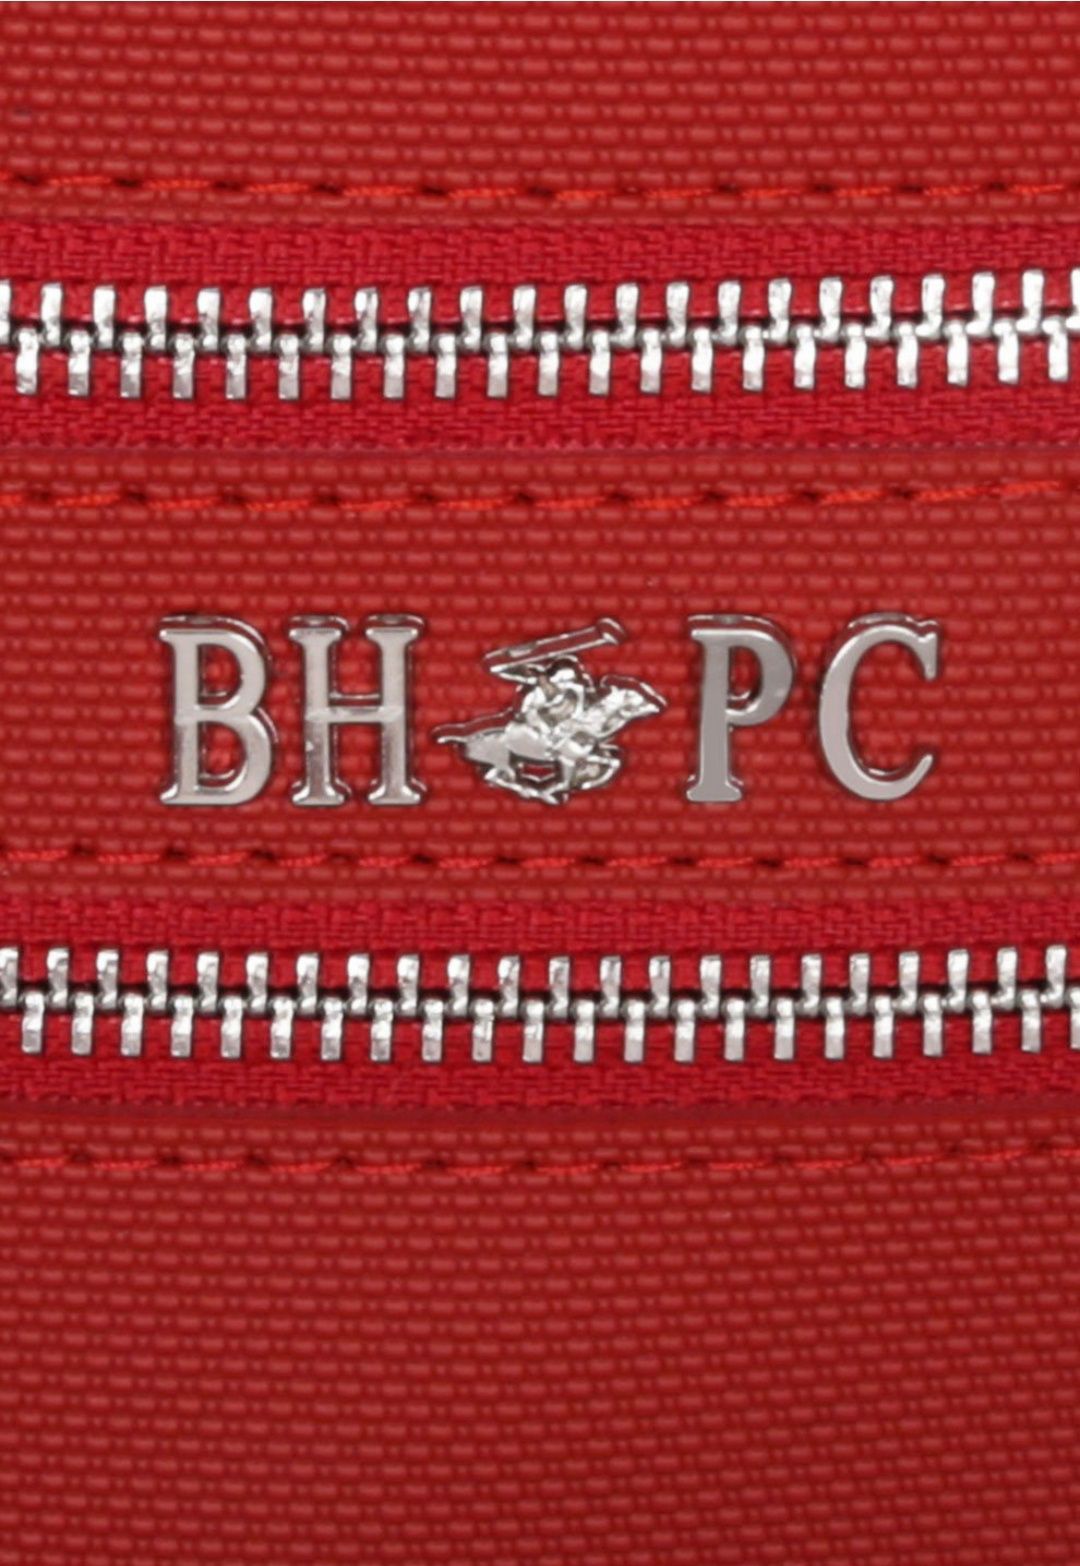 Beverly Hills Polo Club чанта за кръста